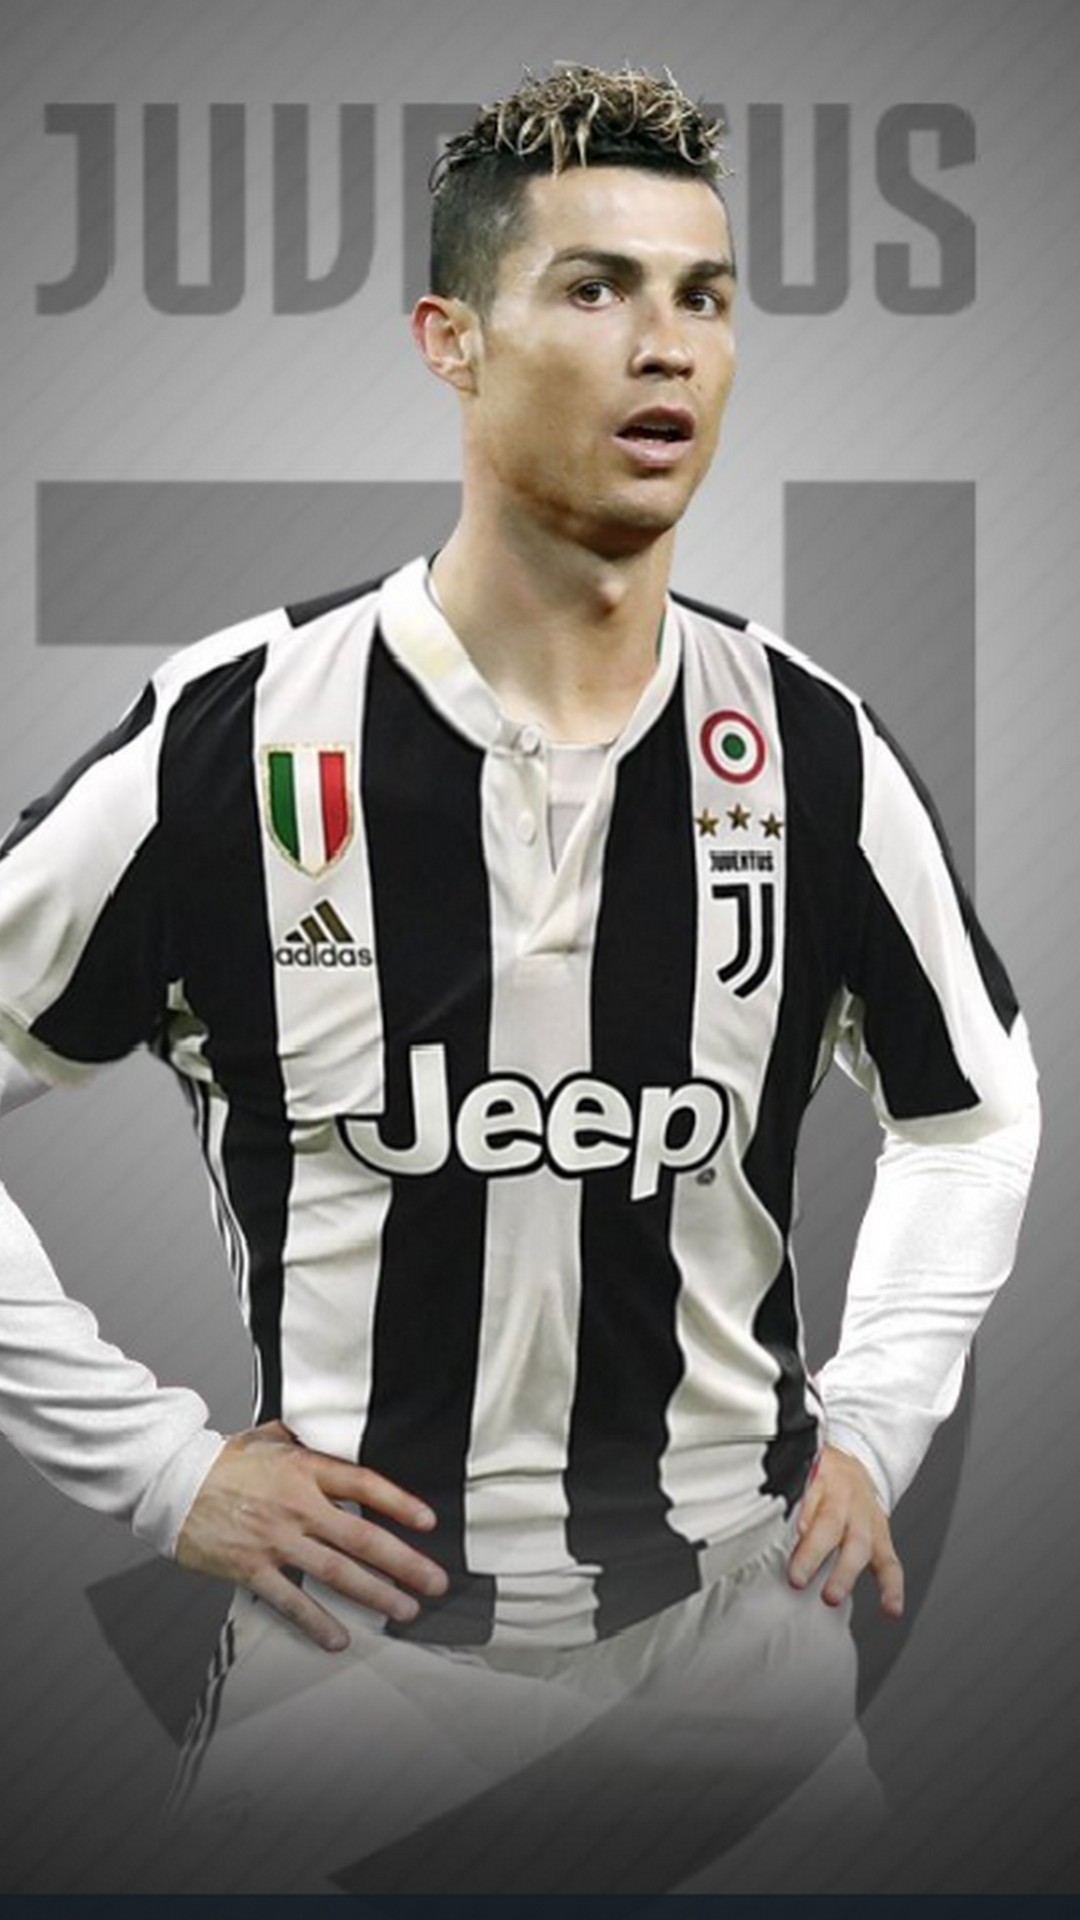 Wallpaper Cristiano Ronaldo Juventus Android